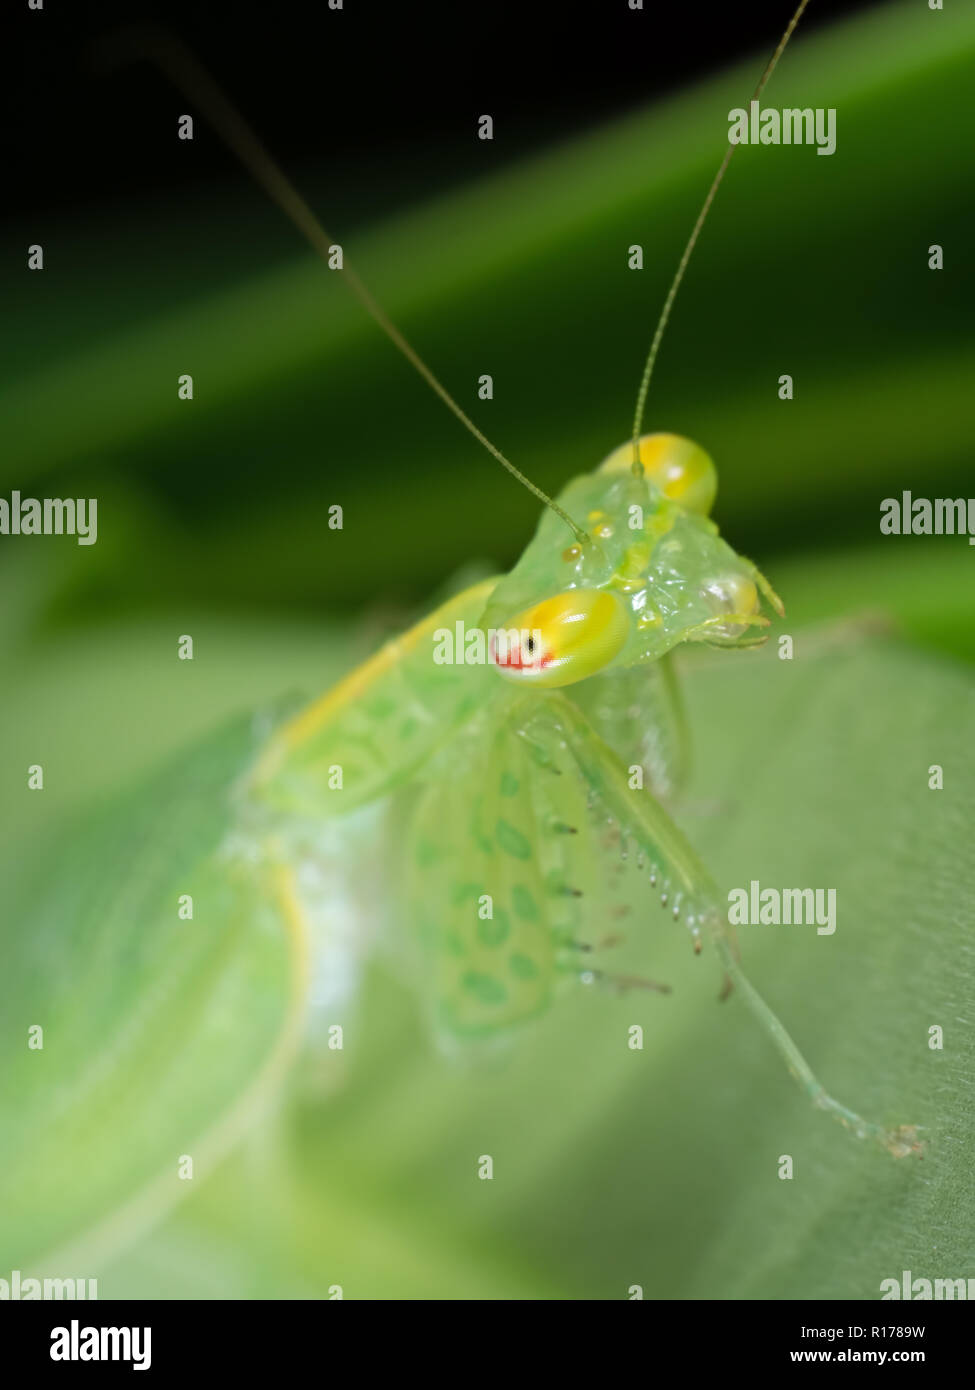 Macro Photography of Eye of Praying Mantis on Green Leaf Stock Photo